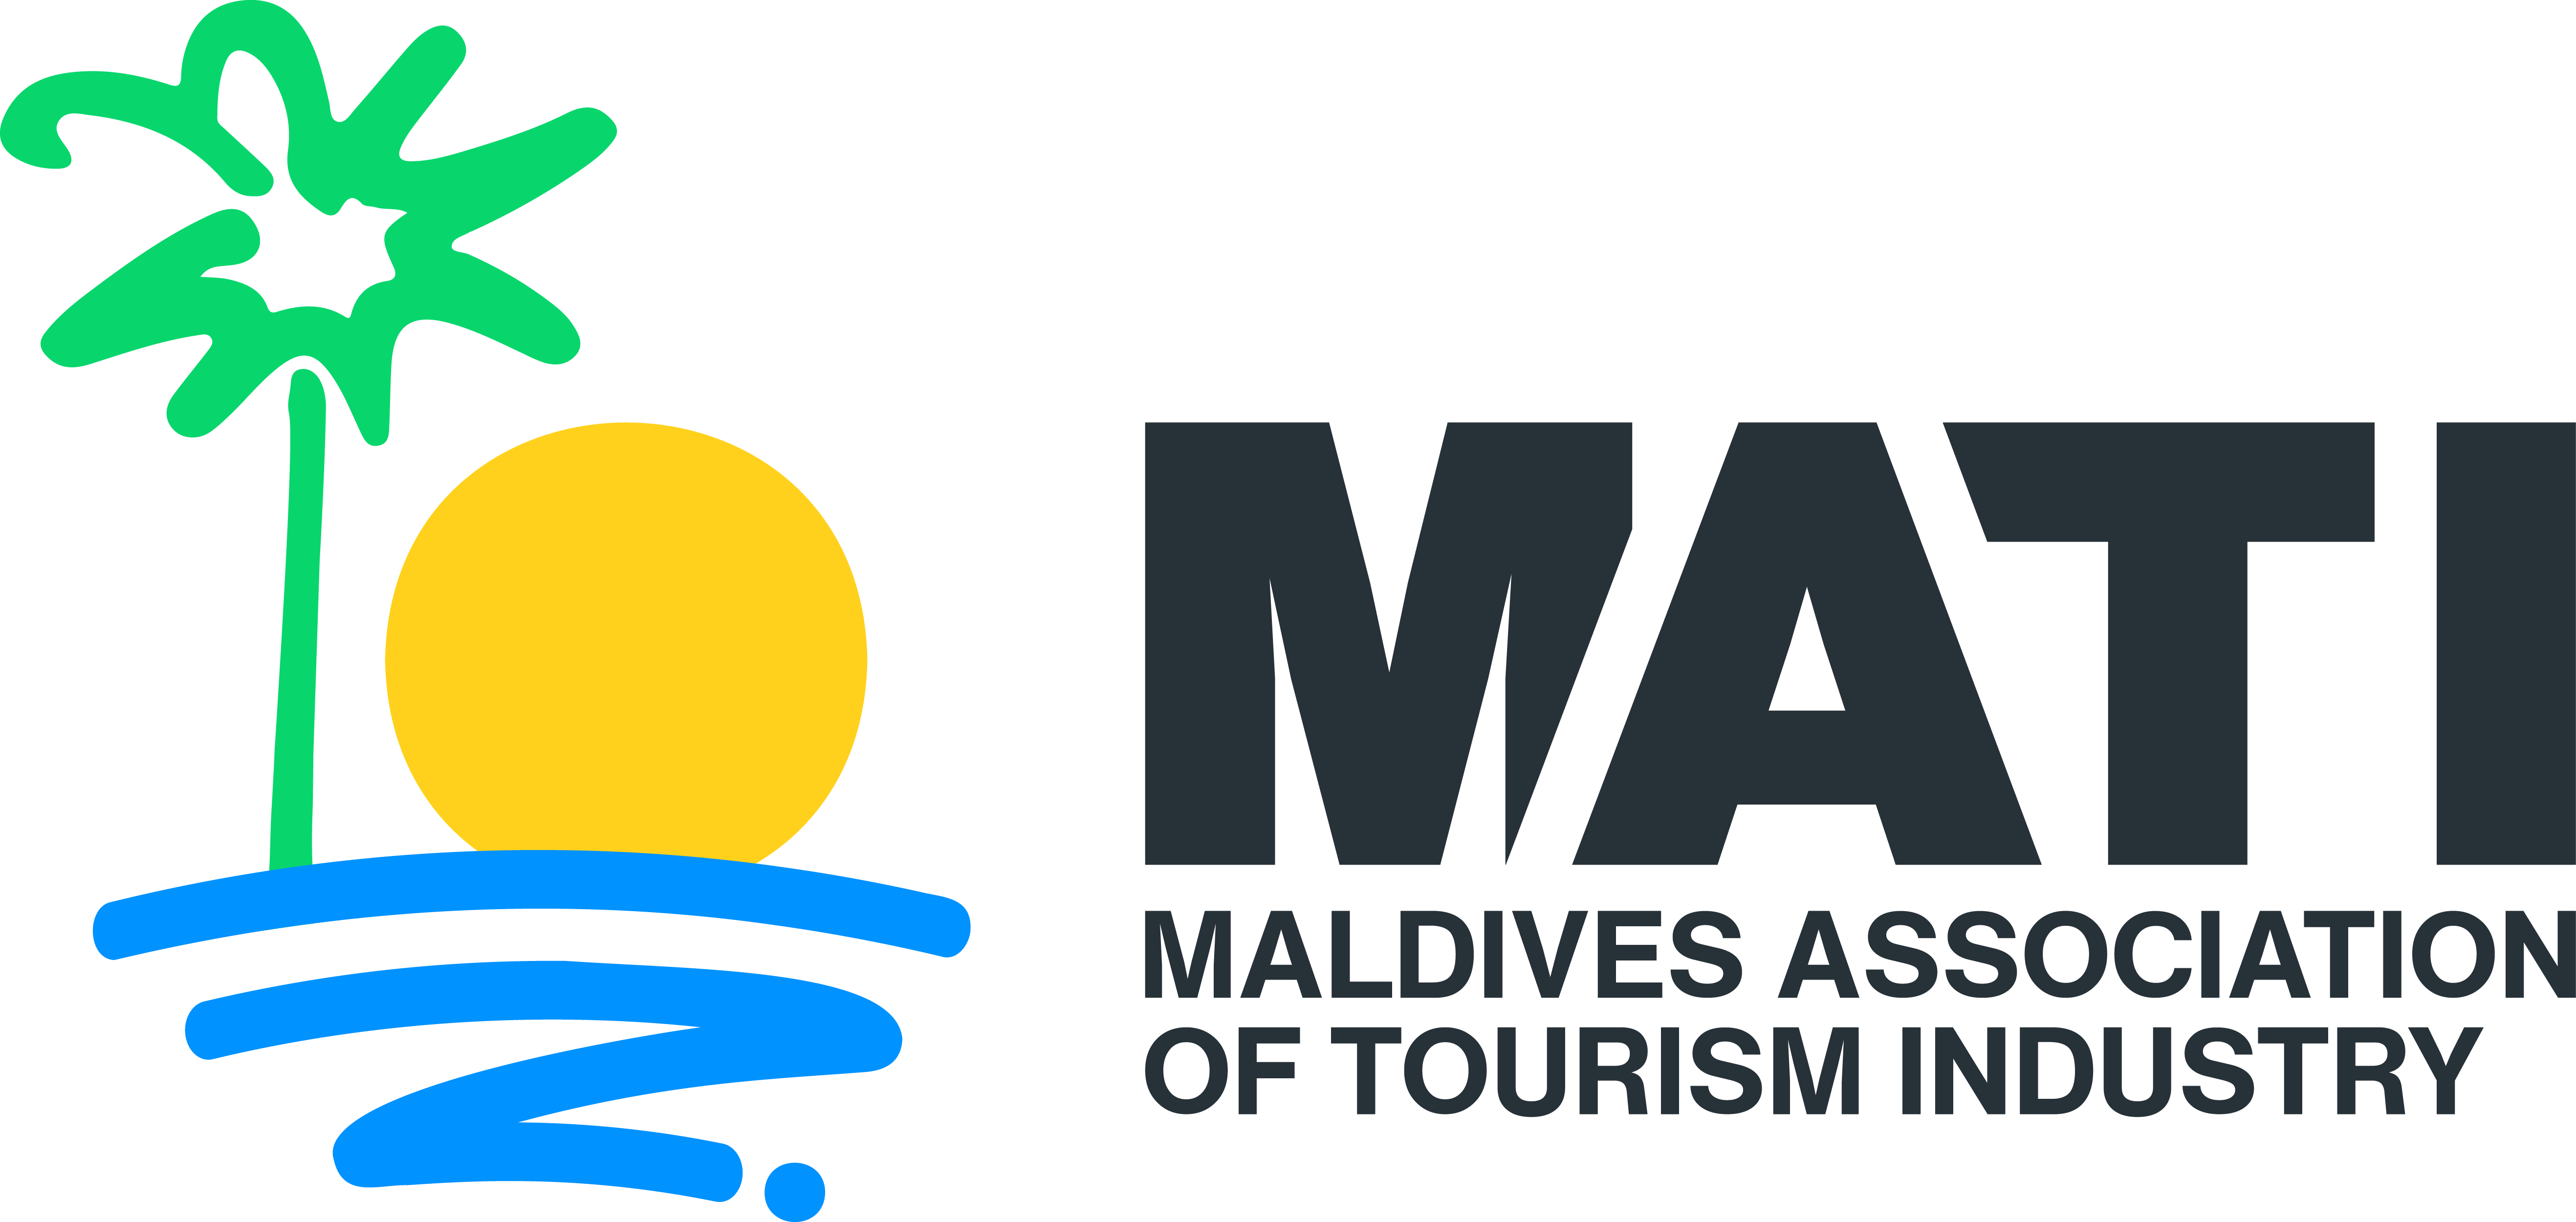 Maldives Association of Tourism Industry (MATI)